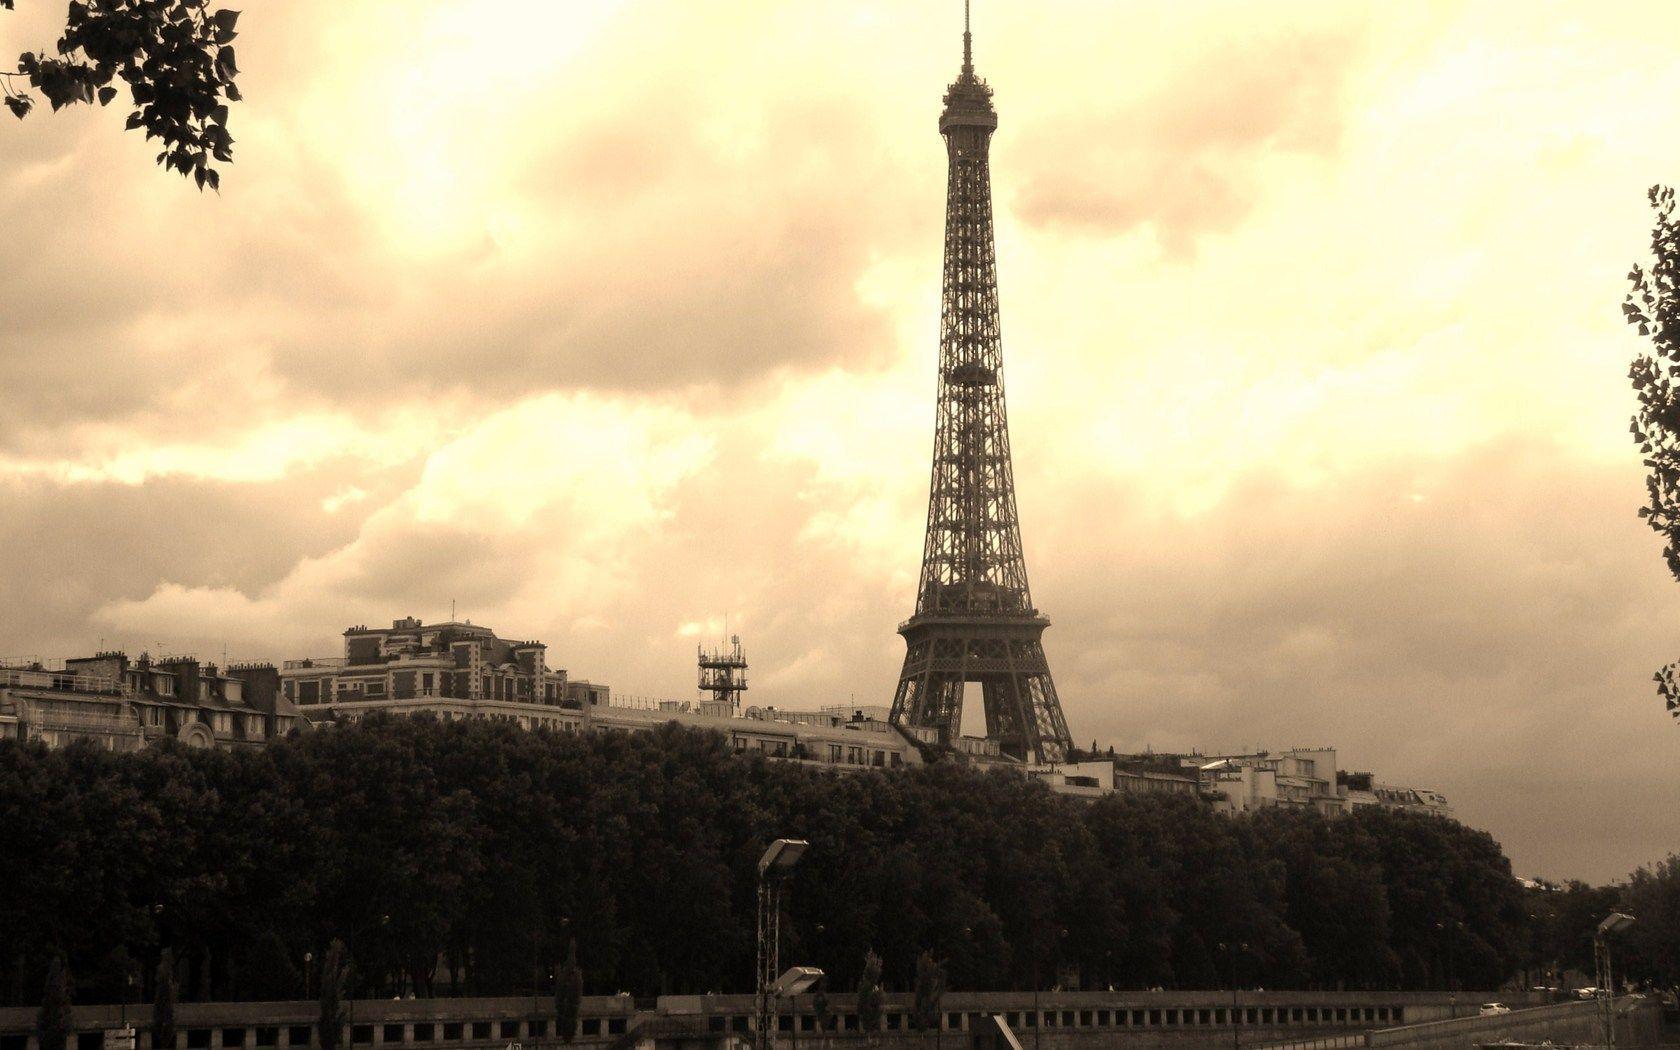 Download wallpapers Paris, France free desktop wallpapers in the